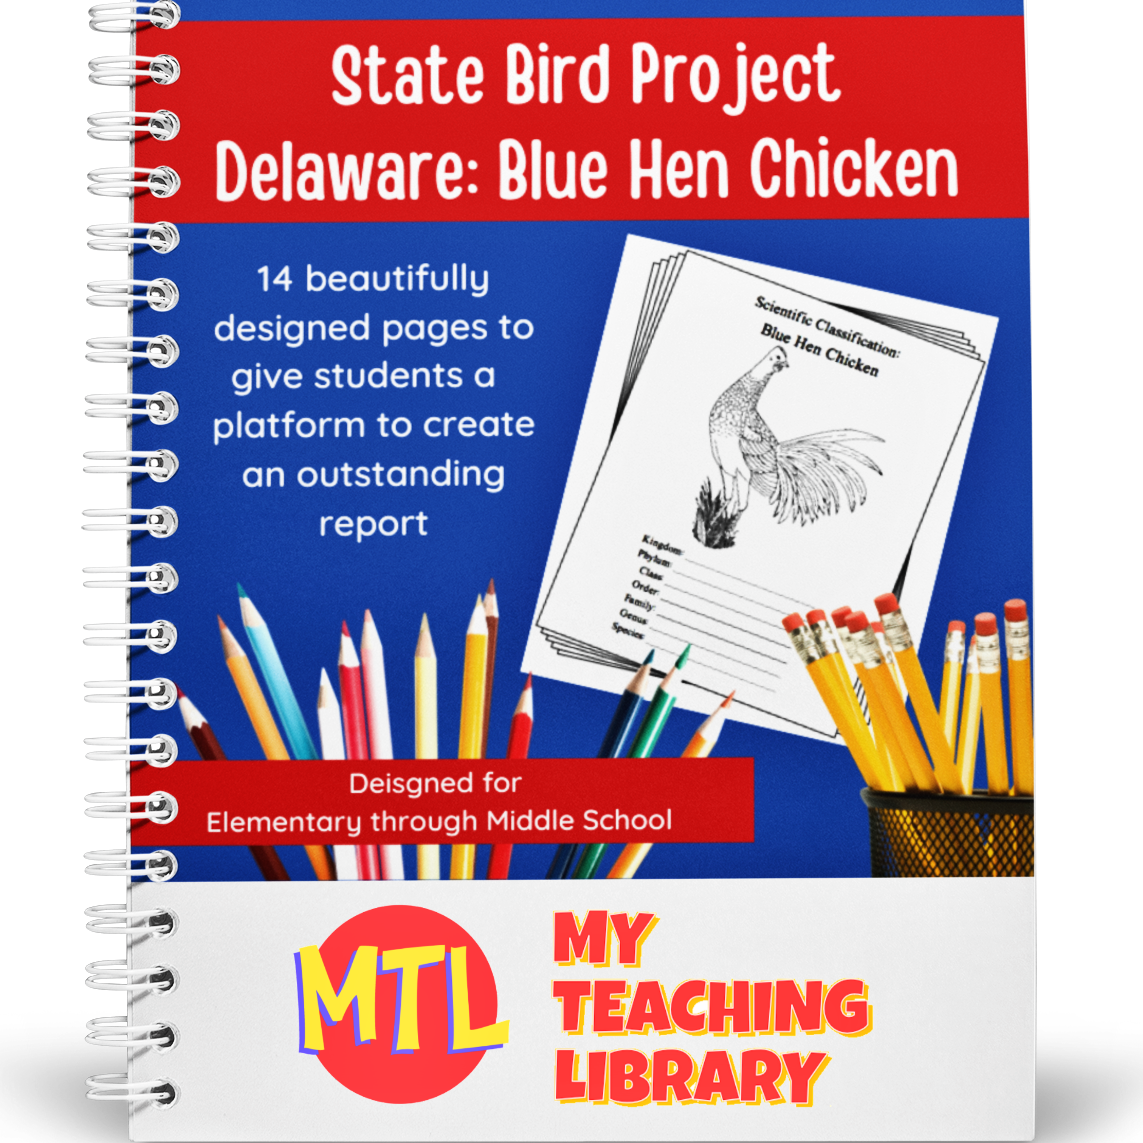 z 456 Delaware Blue Hen Chicken cover